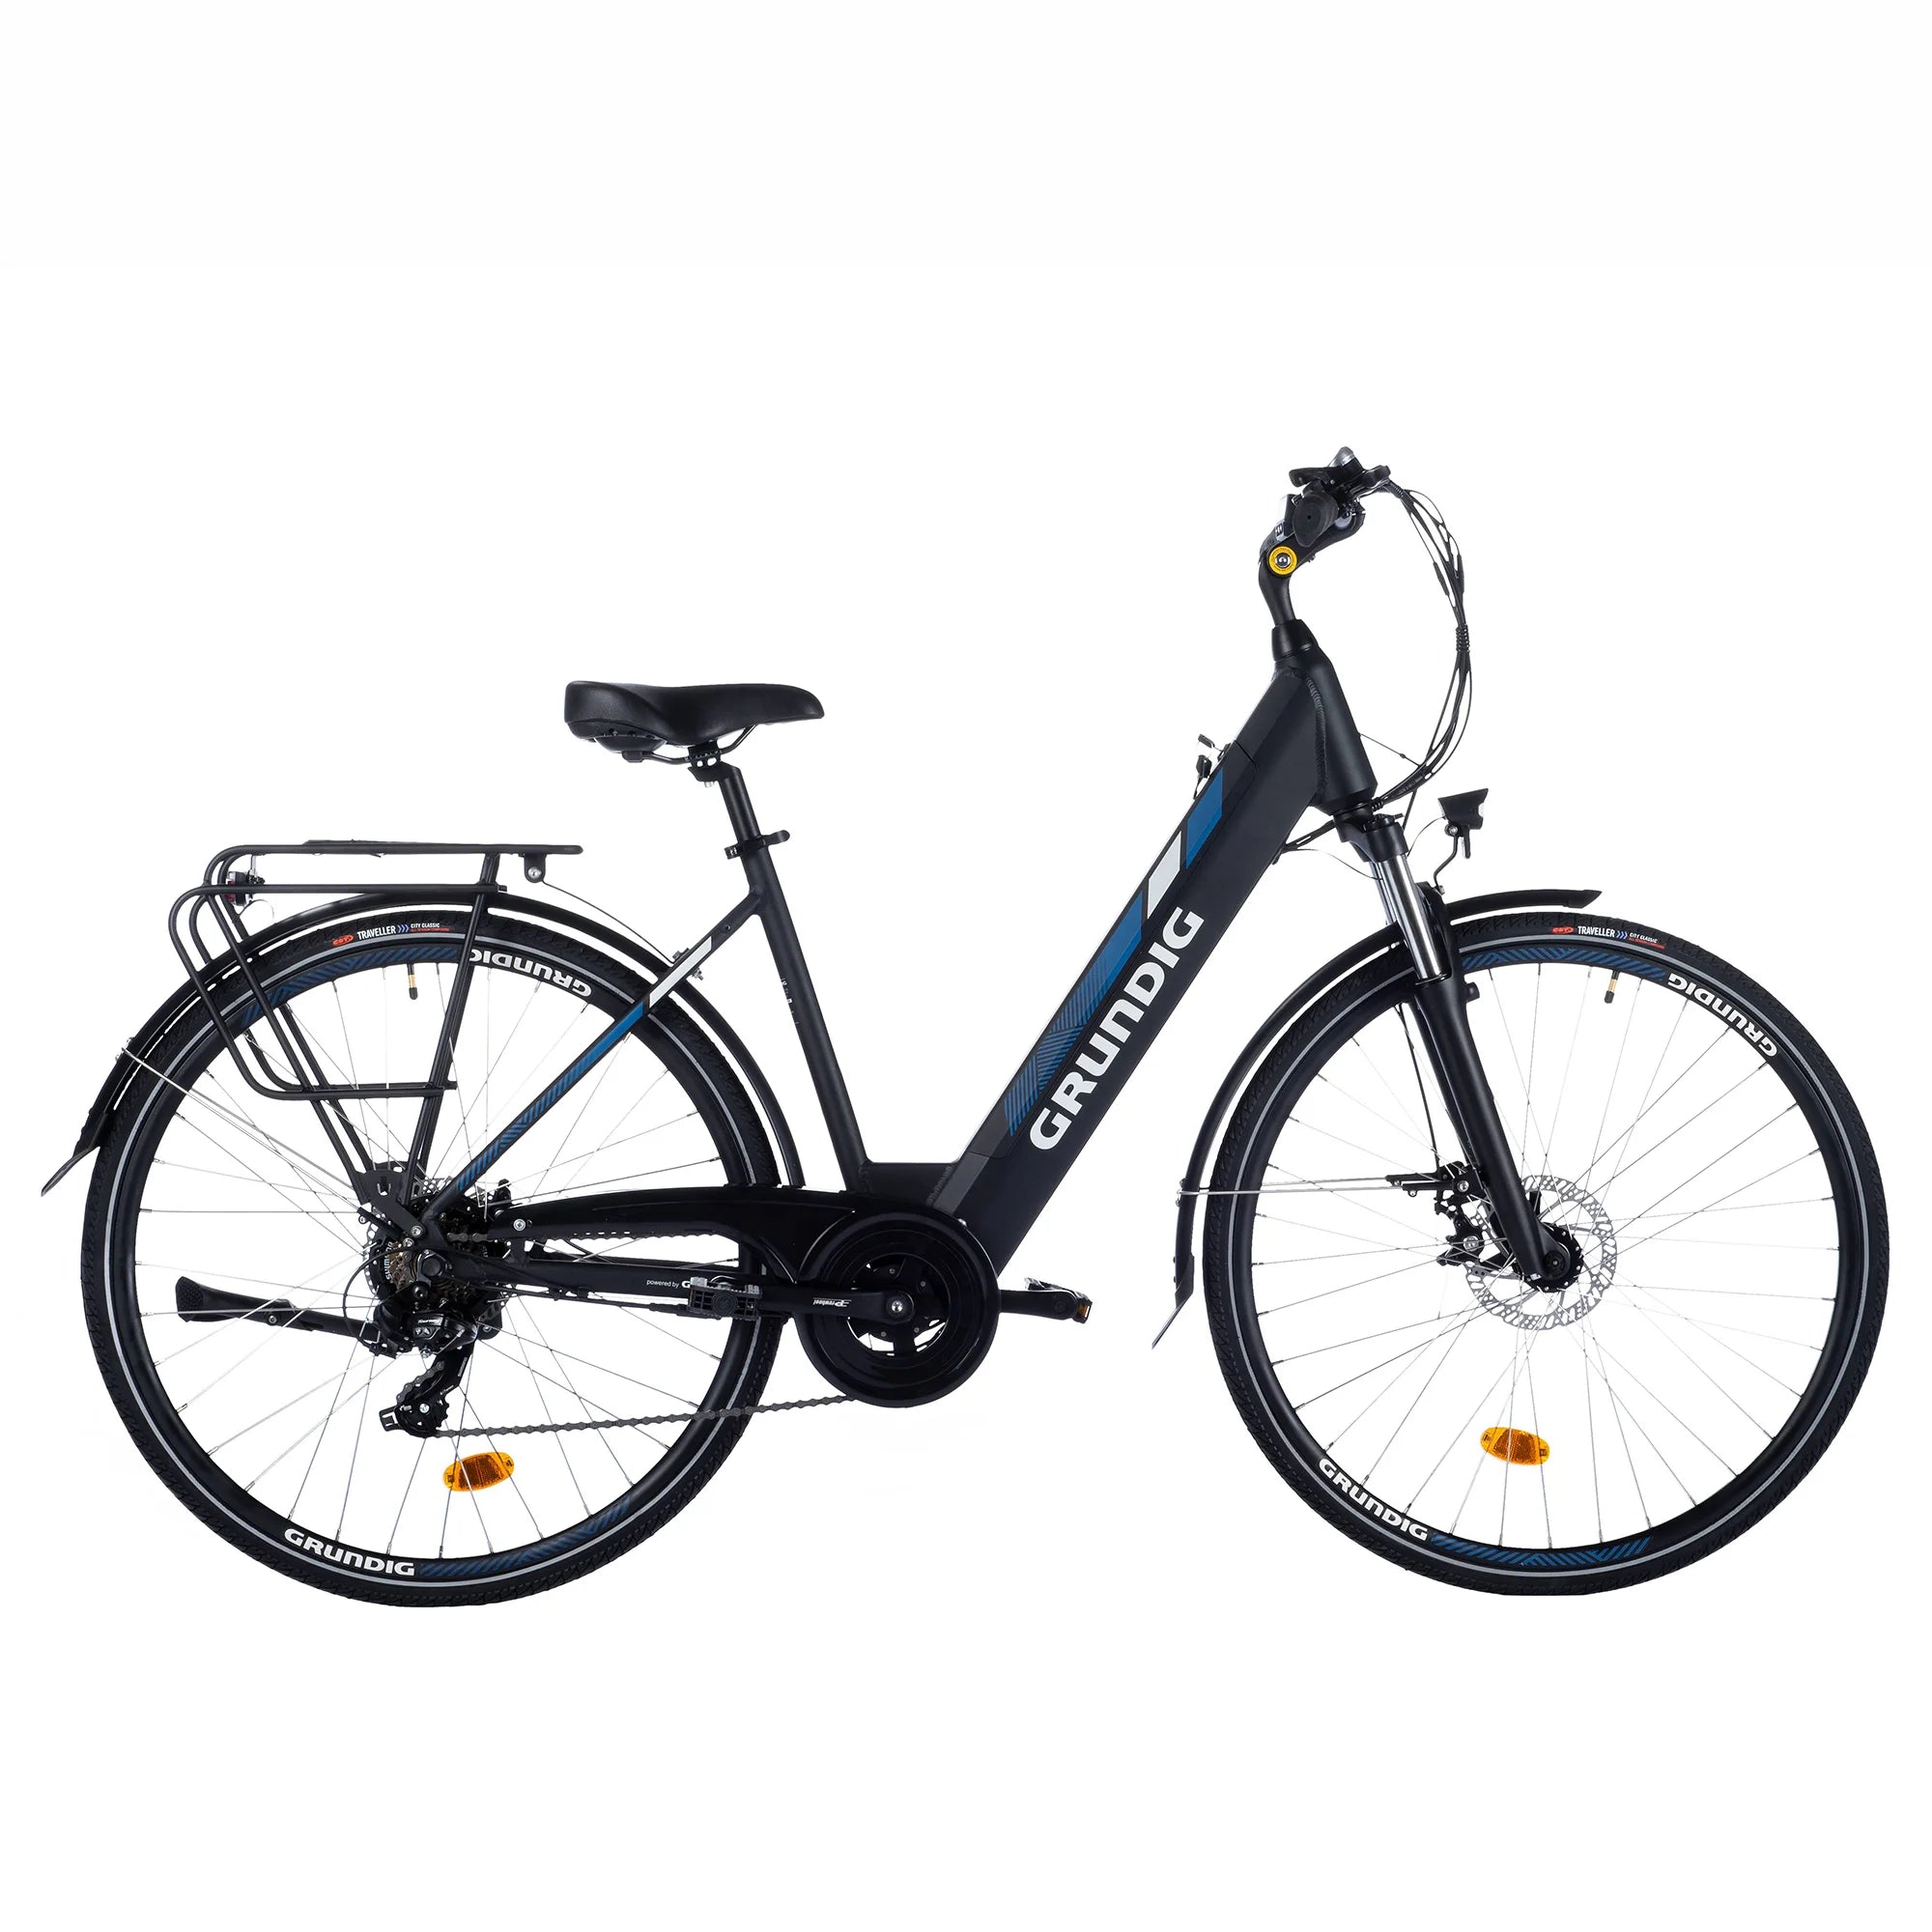 GRUNDIG ECB2800 stads-e-bike